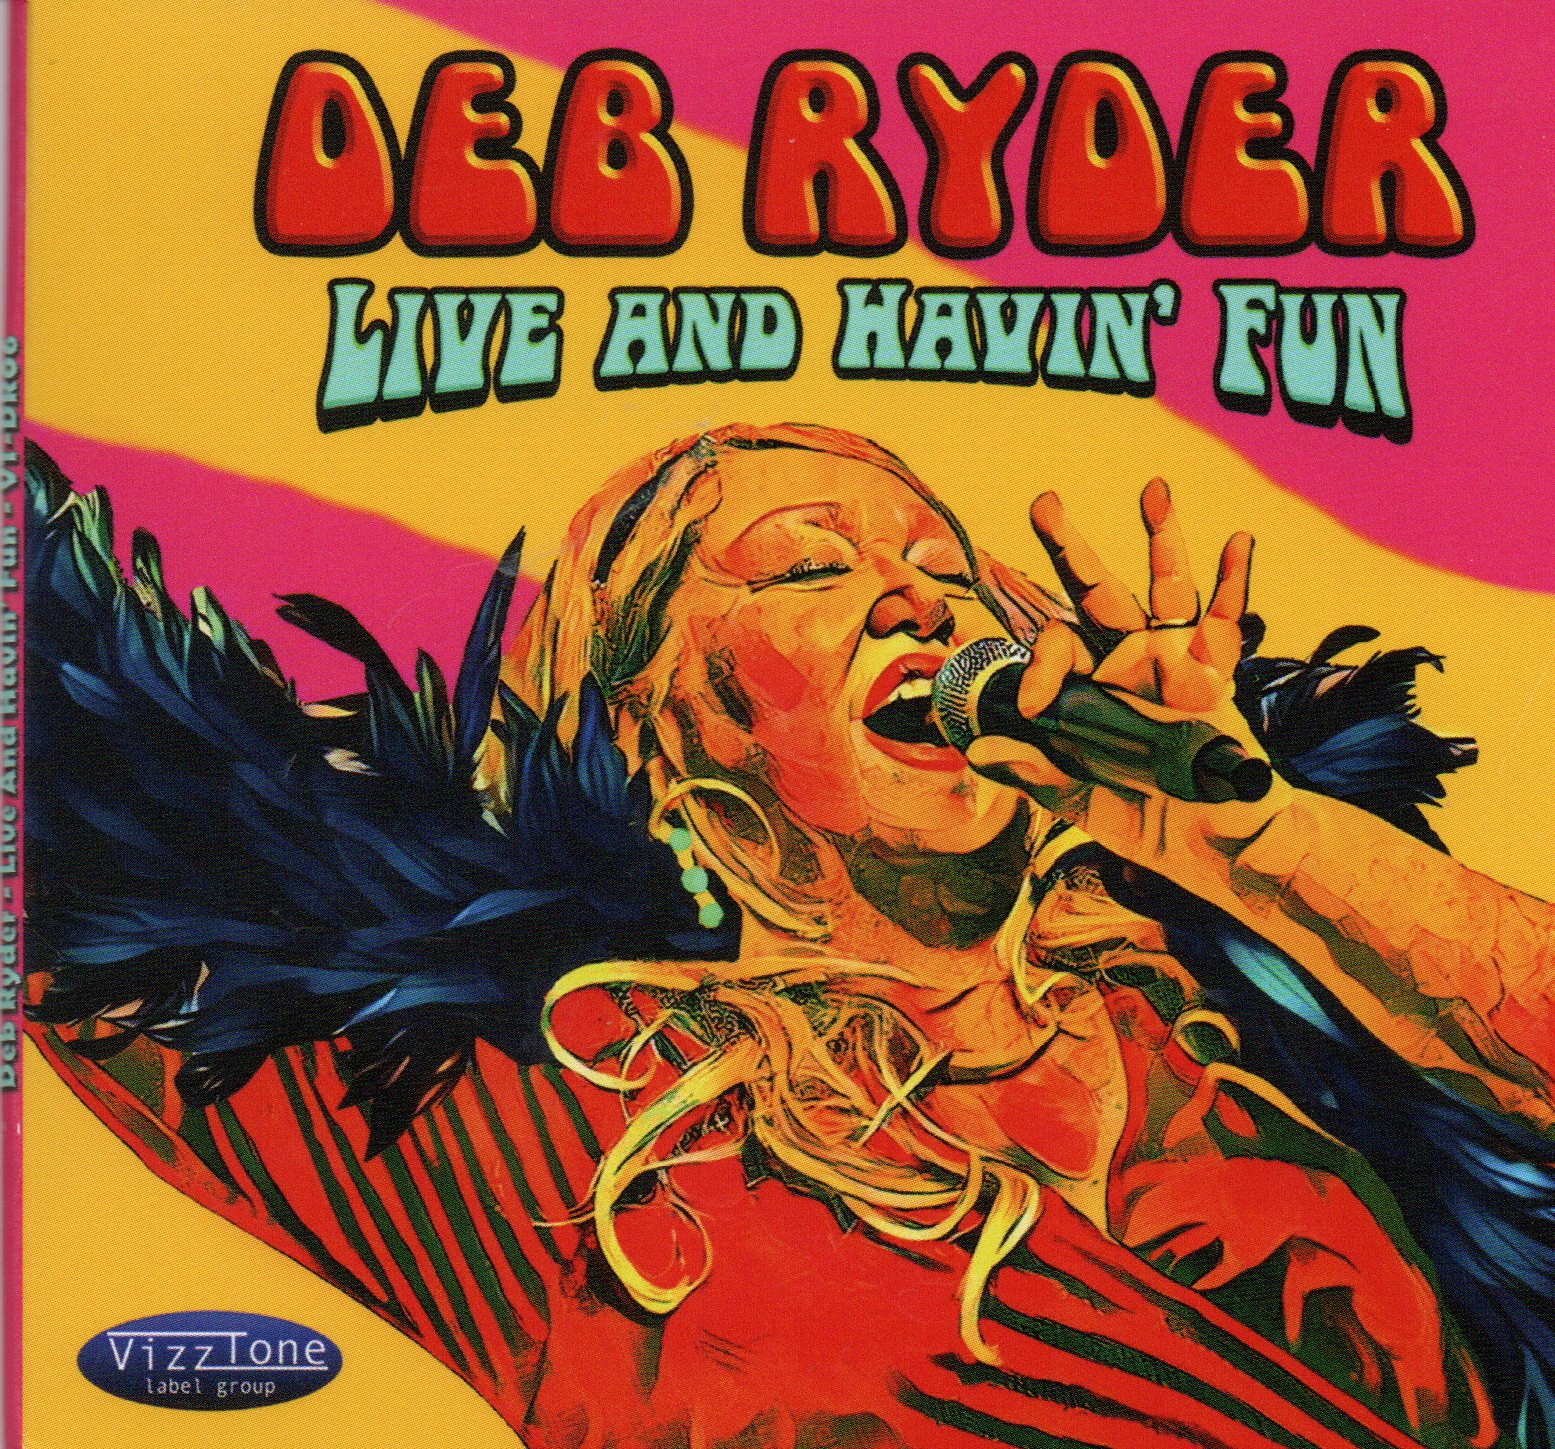 Deb Ryder "Live & Havin' Fun"